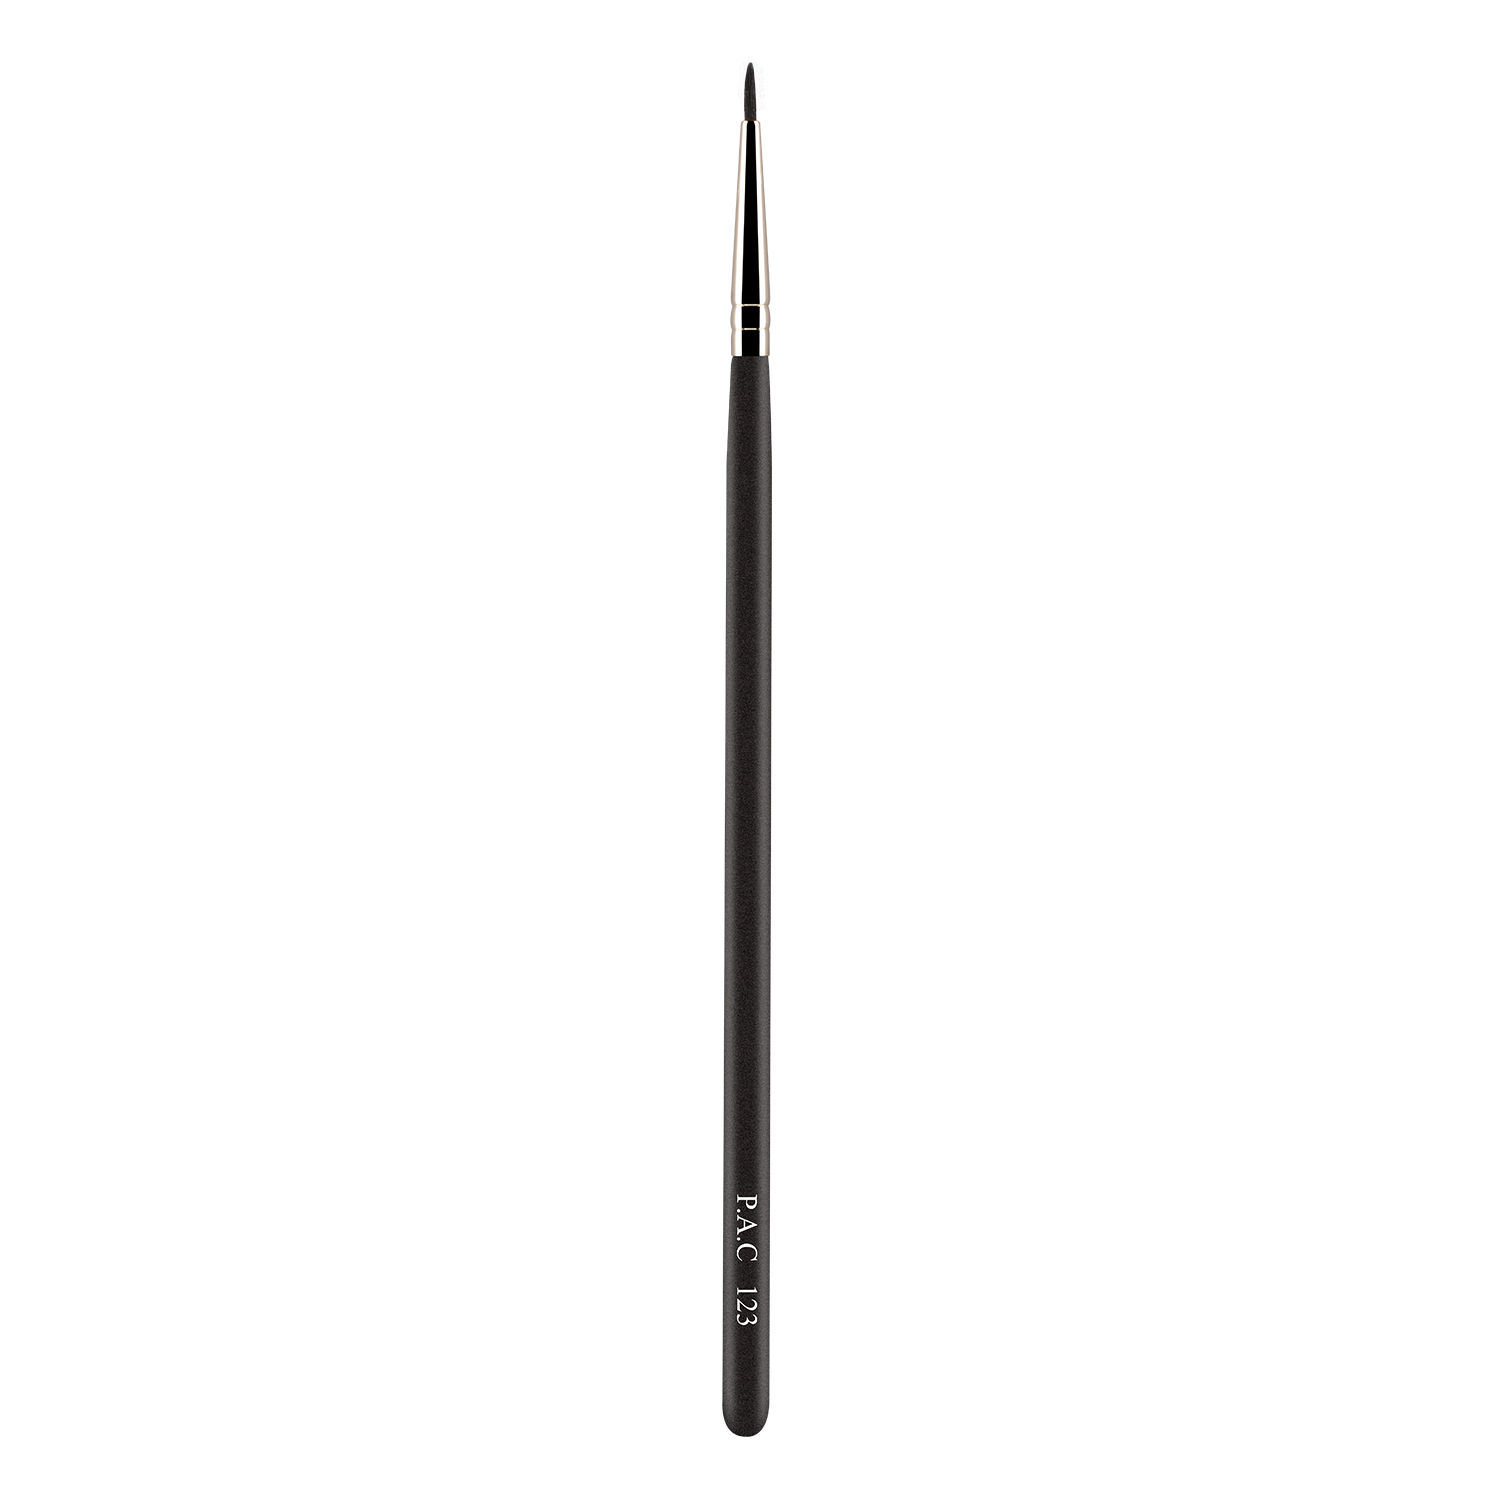 PAC Eyeliner Brush - 123